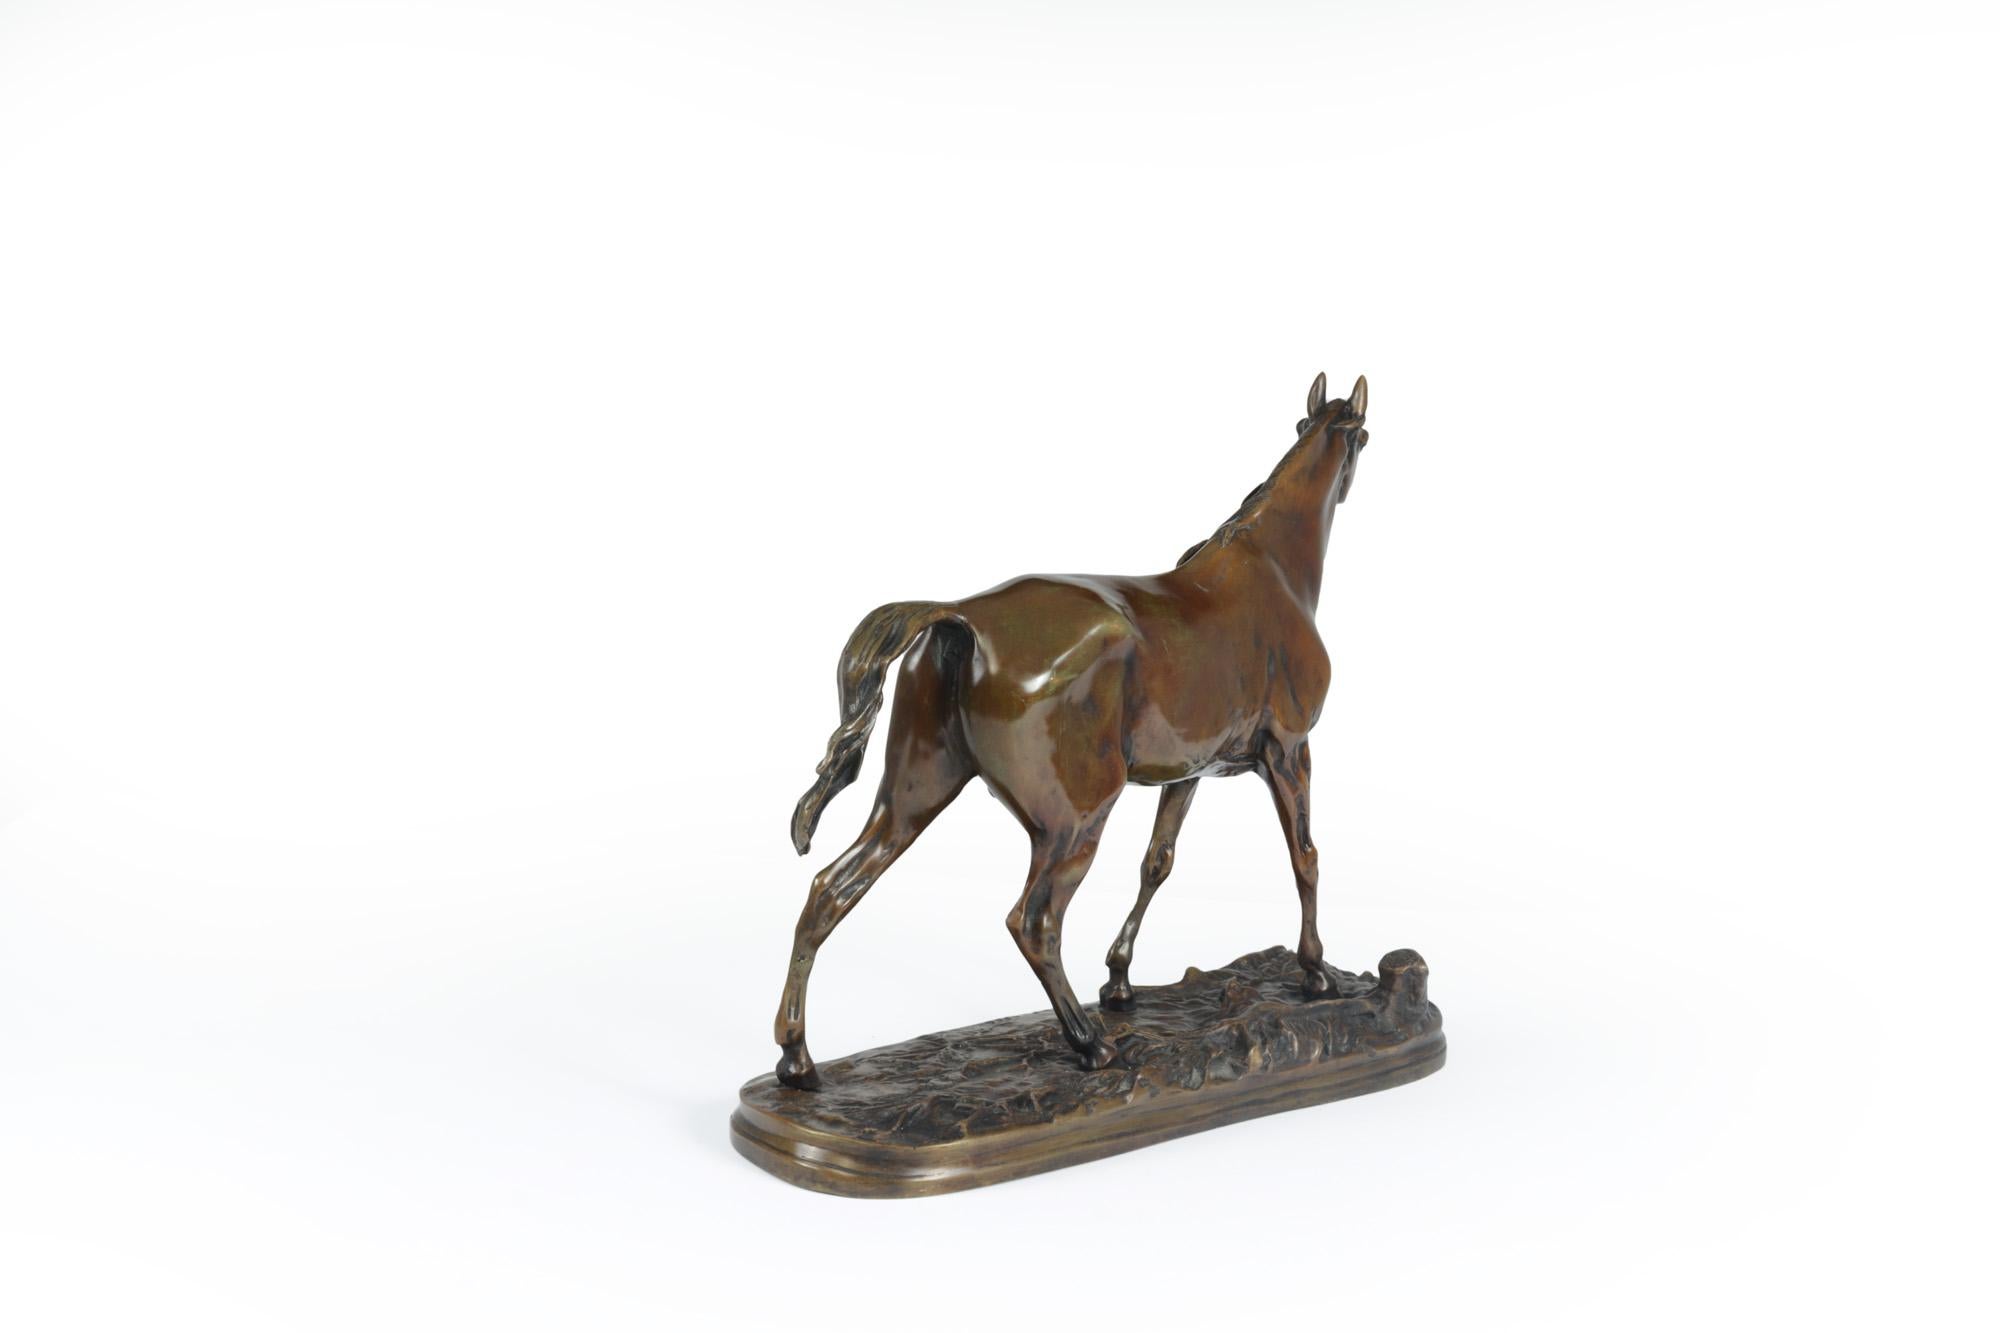 Other Bronze Horse Sculpture by Mene, 1856